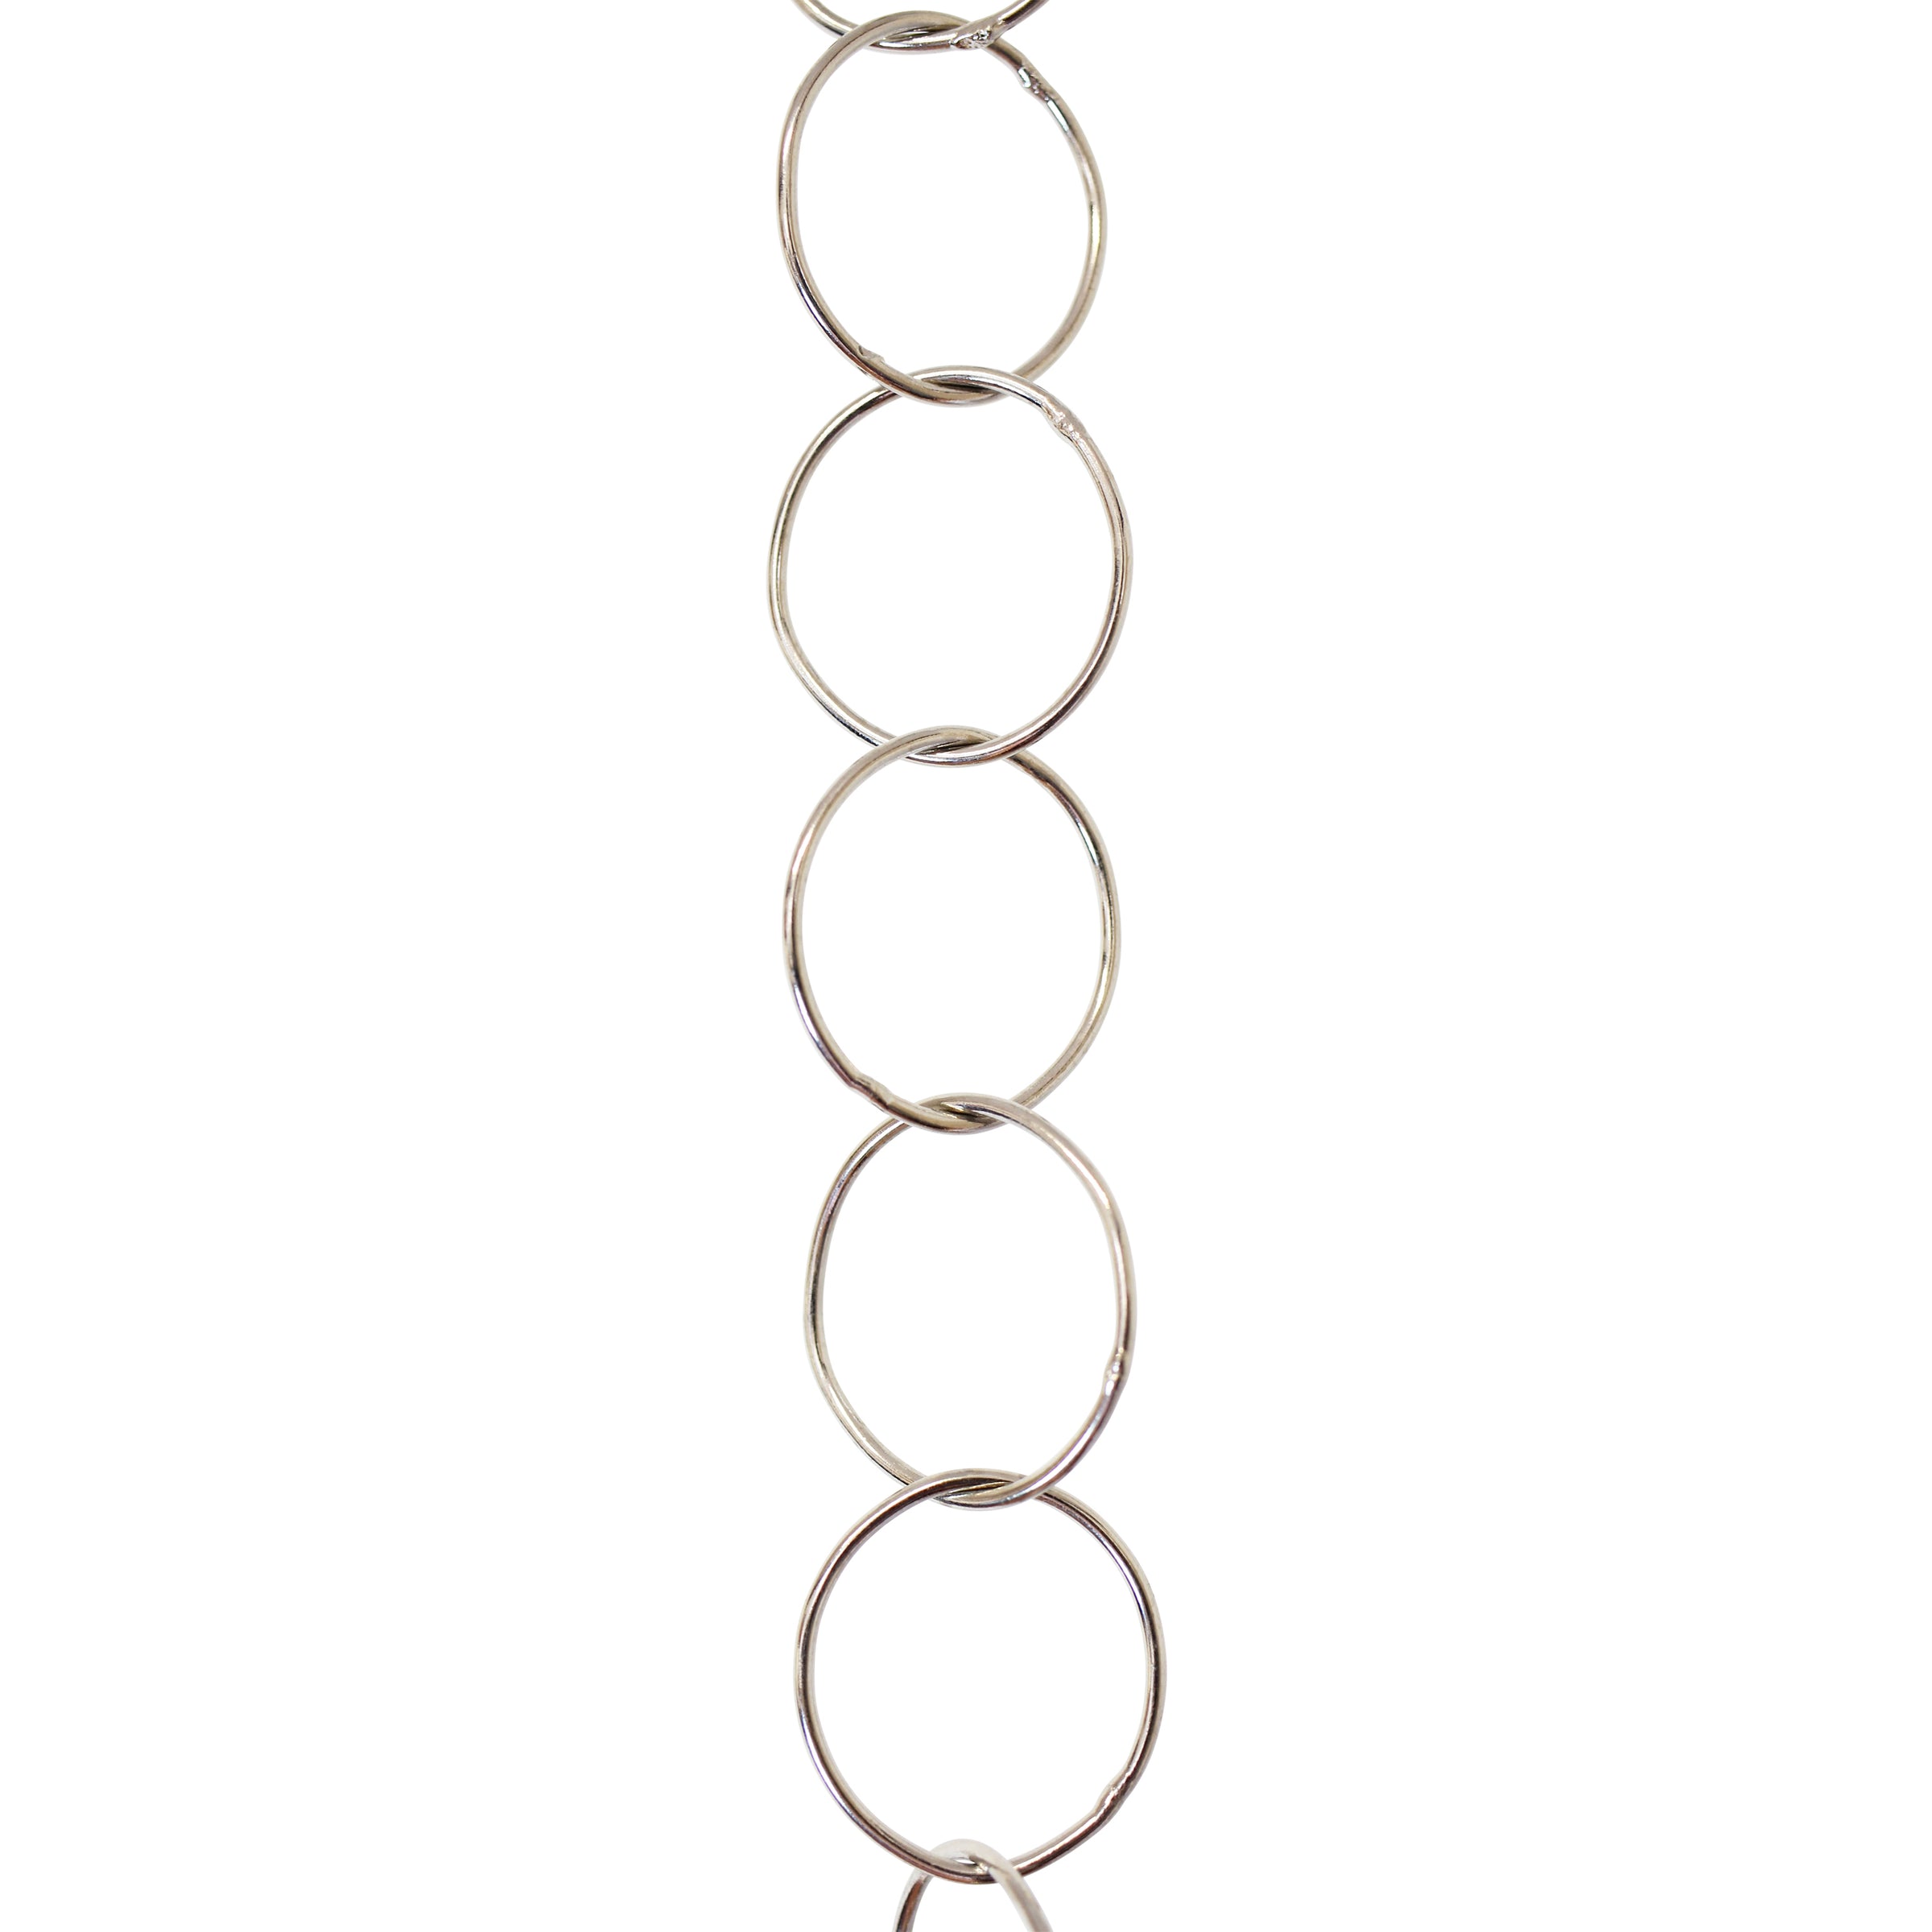 Small Light Weight Round Welded Decorative Brass Chain | RCH Hardware